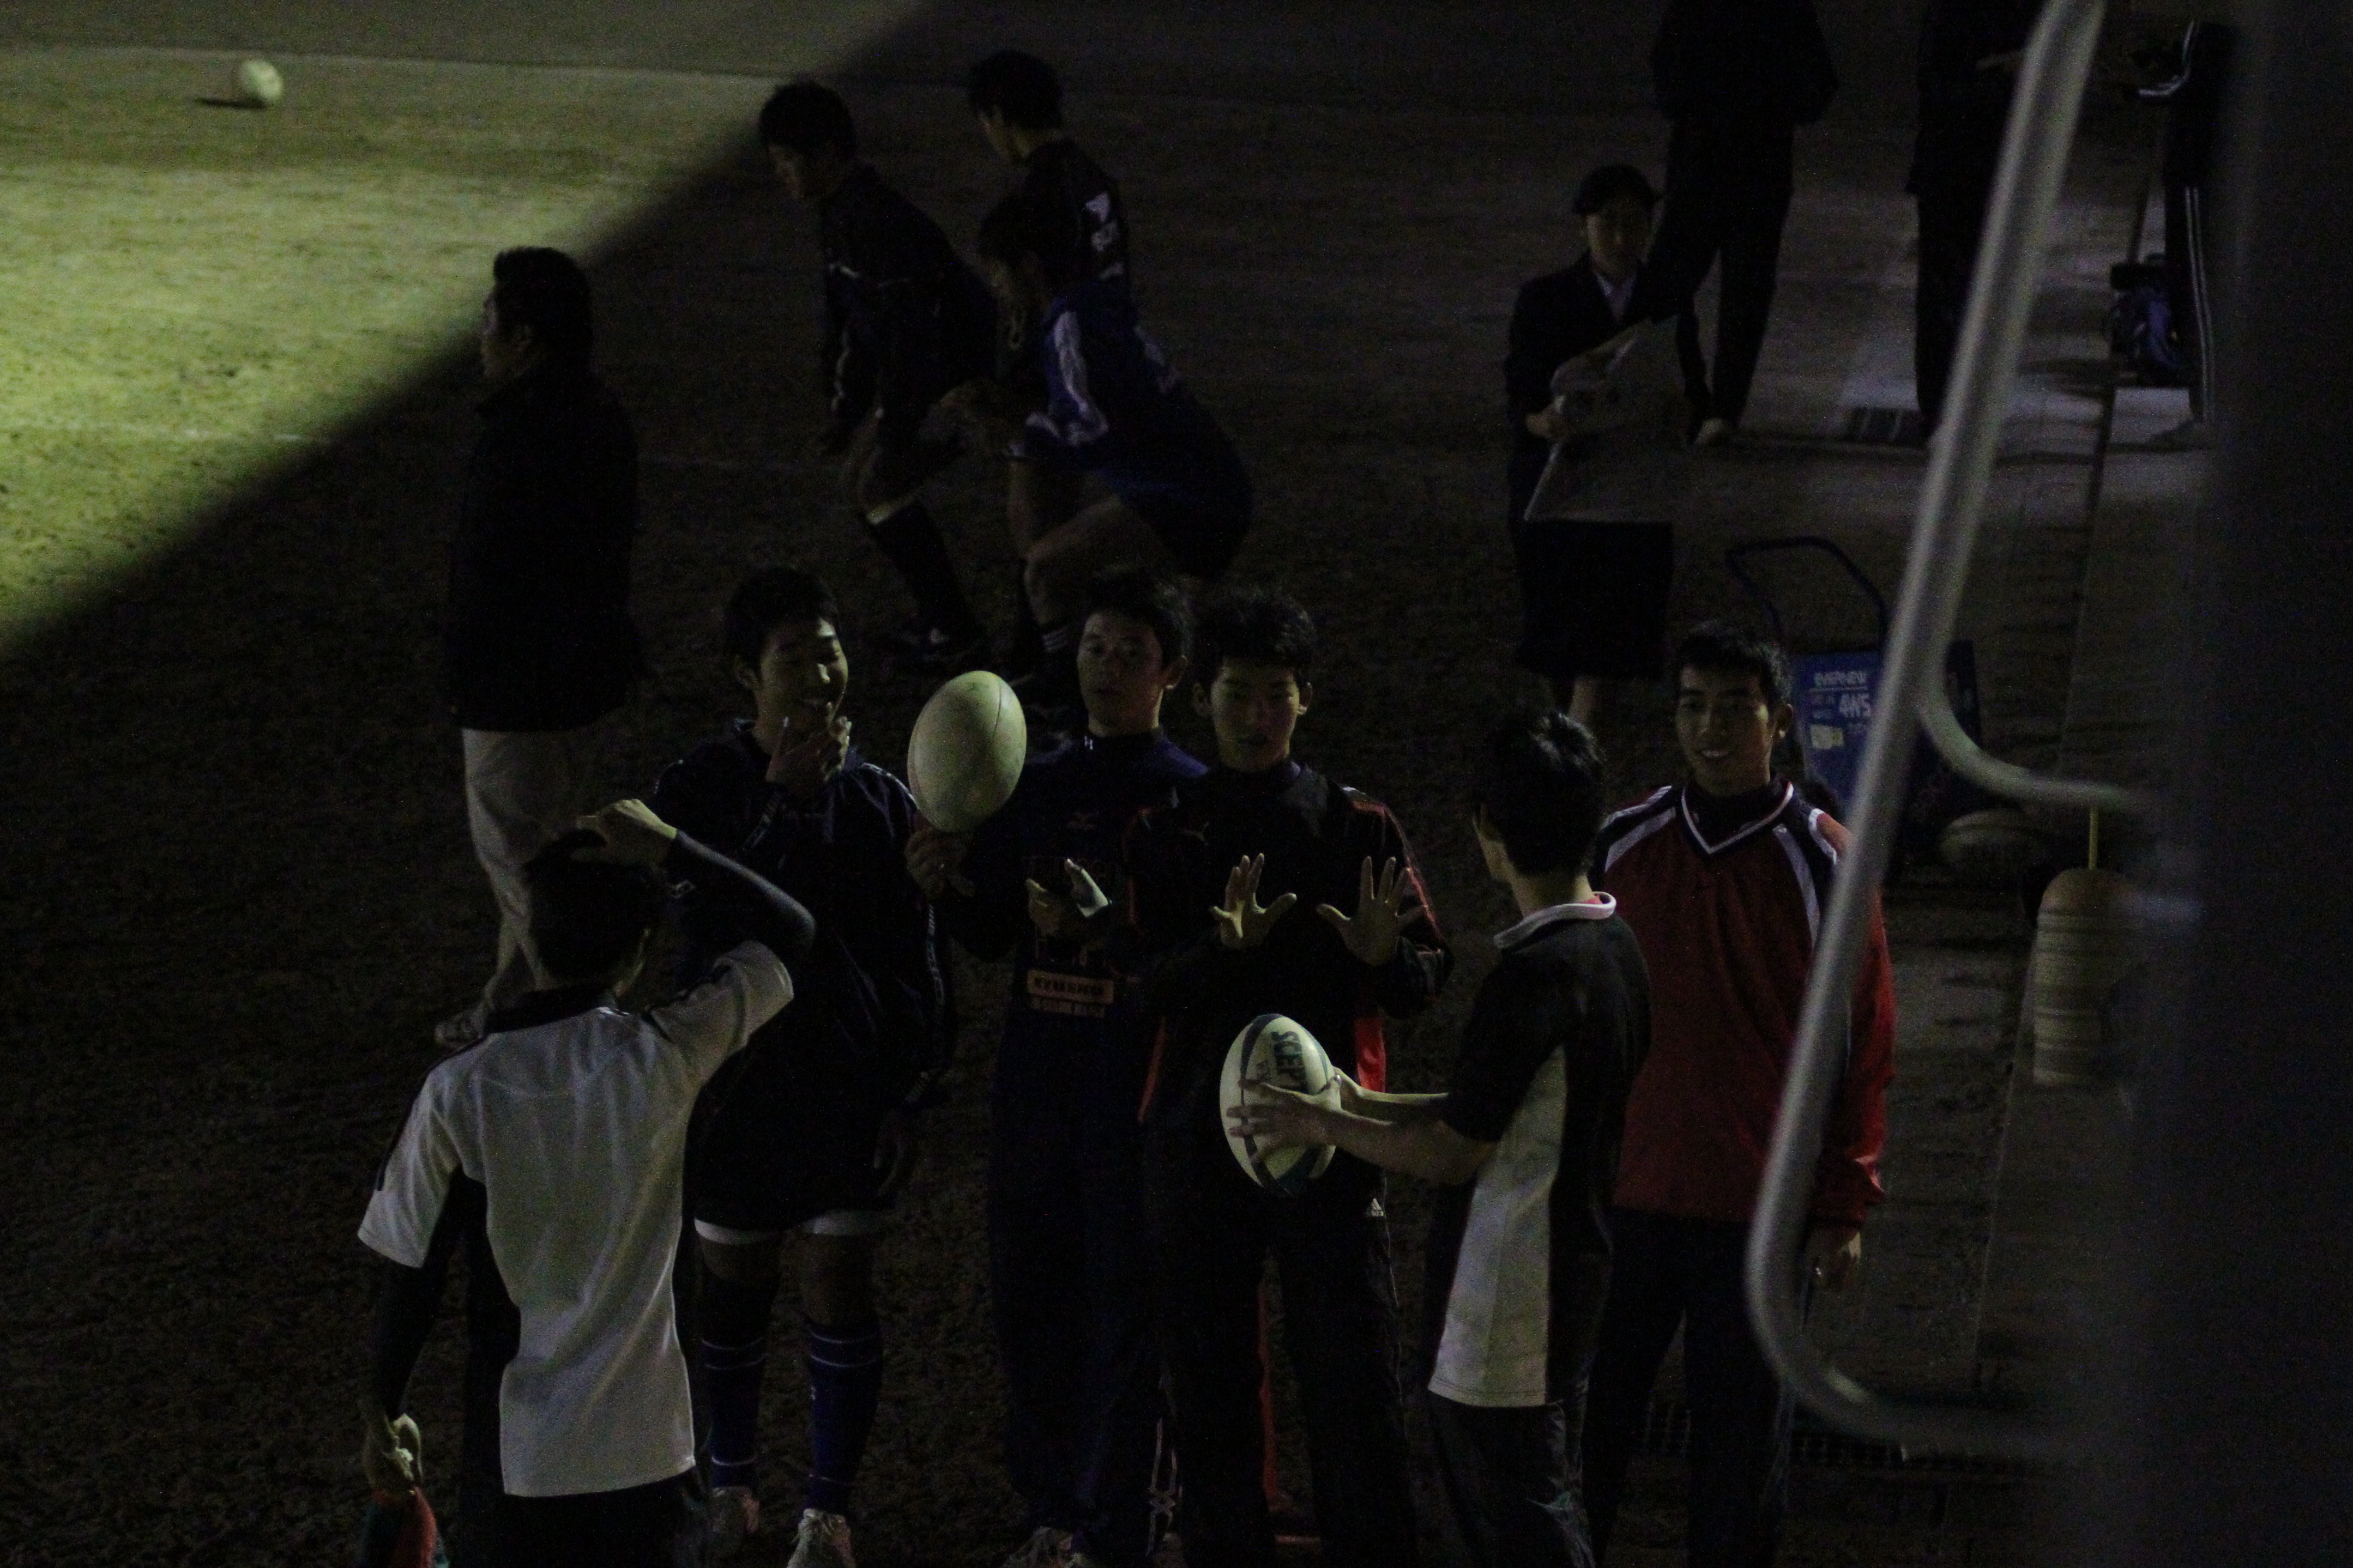 http://kokura-rugby.sakura.ne.jp/2010.11.4-7.JPG